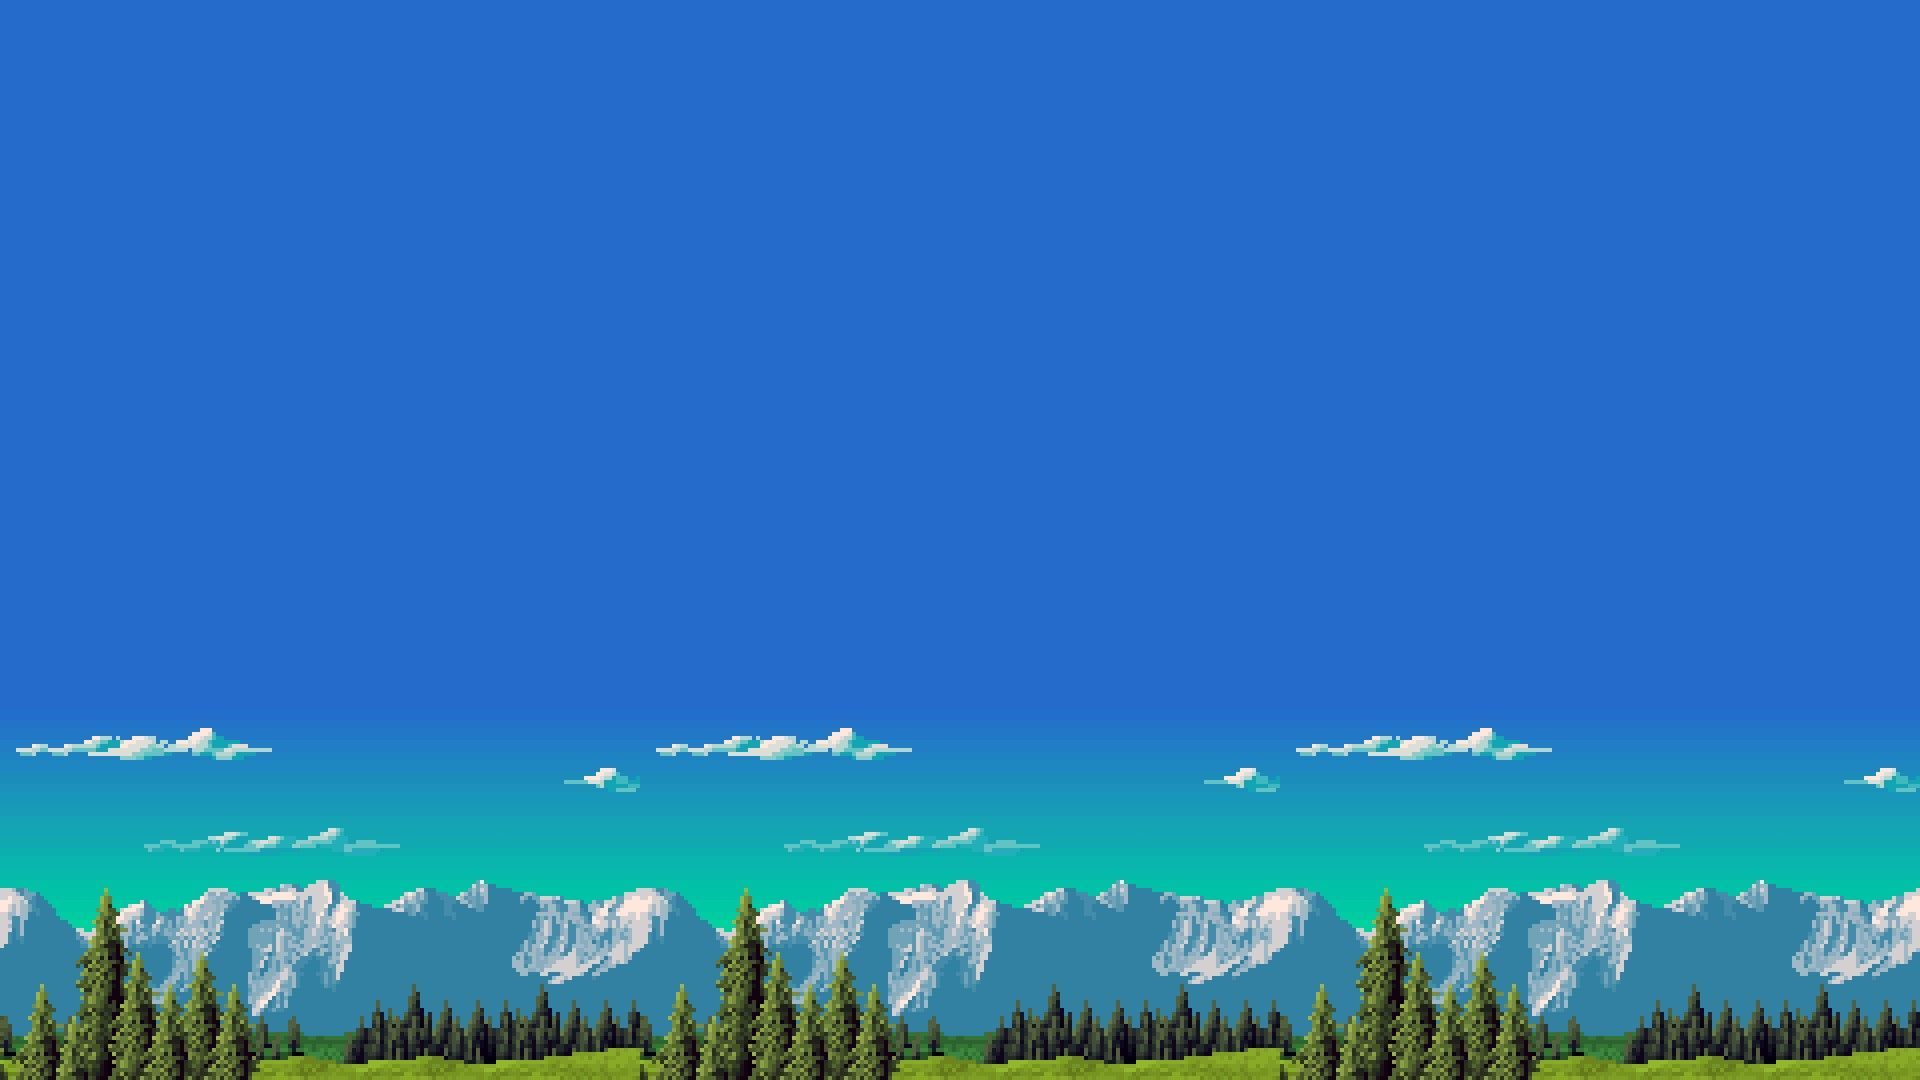 retro Games, Mountain, 8 bit Wallpaper. Pixel art landscape, Water illustration, Pixel art